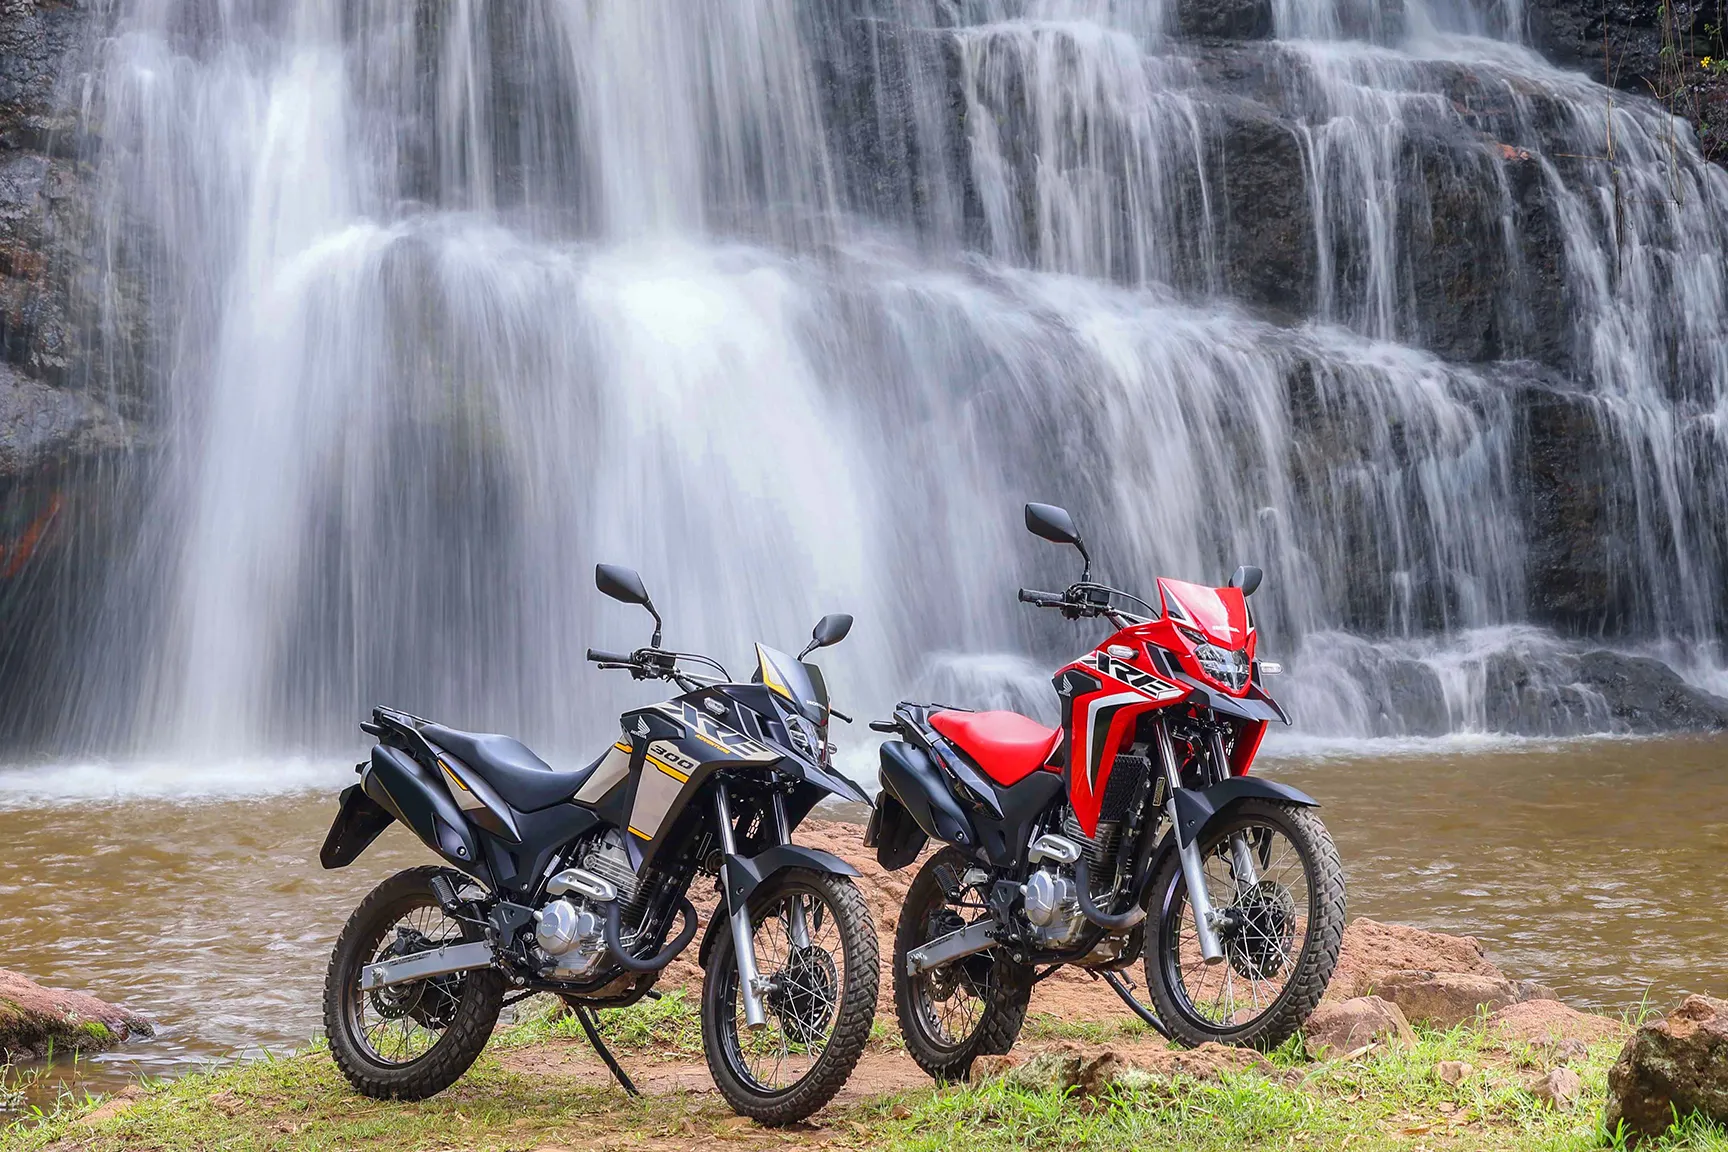 Motos Honda CRF 1100L Africa Twin estacionadas na cachoeira